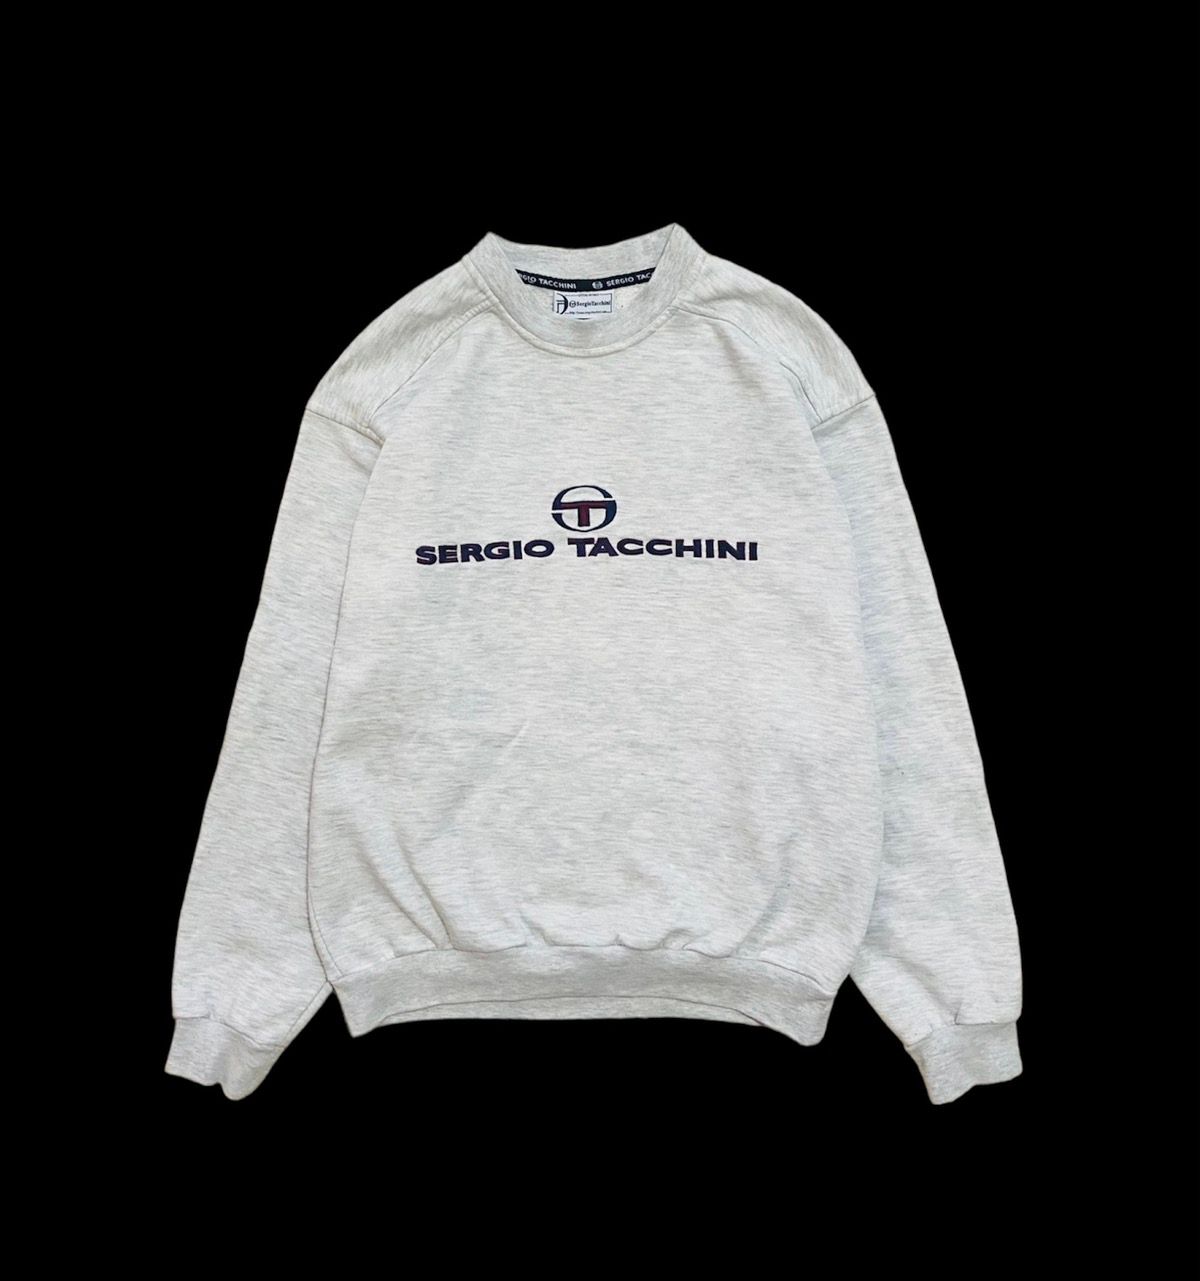 Sergio Tacchini Sweatshirt Big Logo Vintage Grey Italy - 1